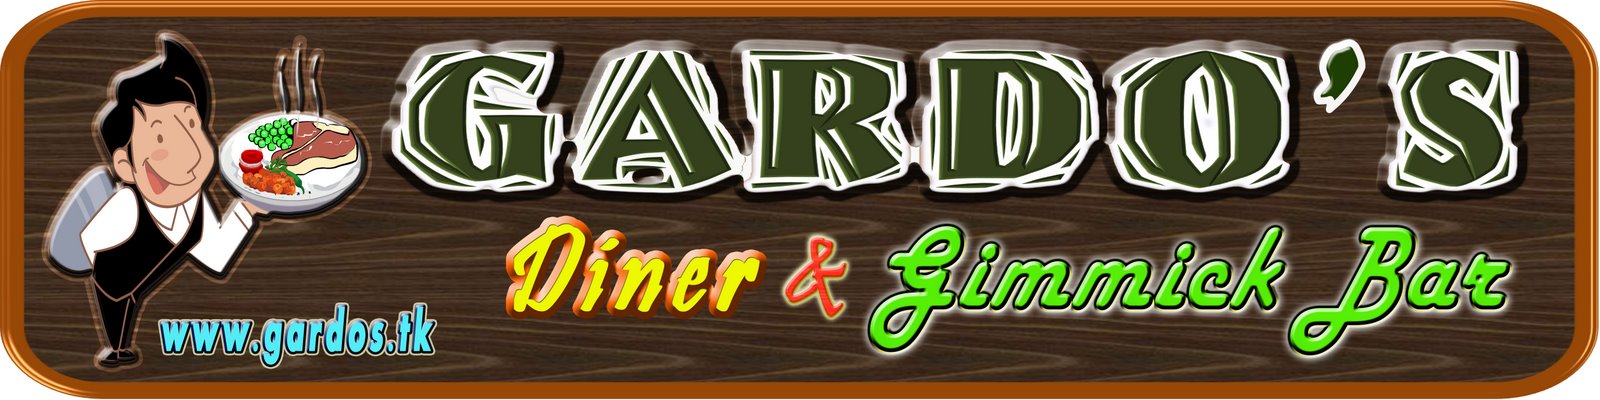 GARDO's Diner & Gimmick Bar